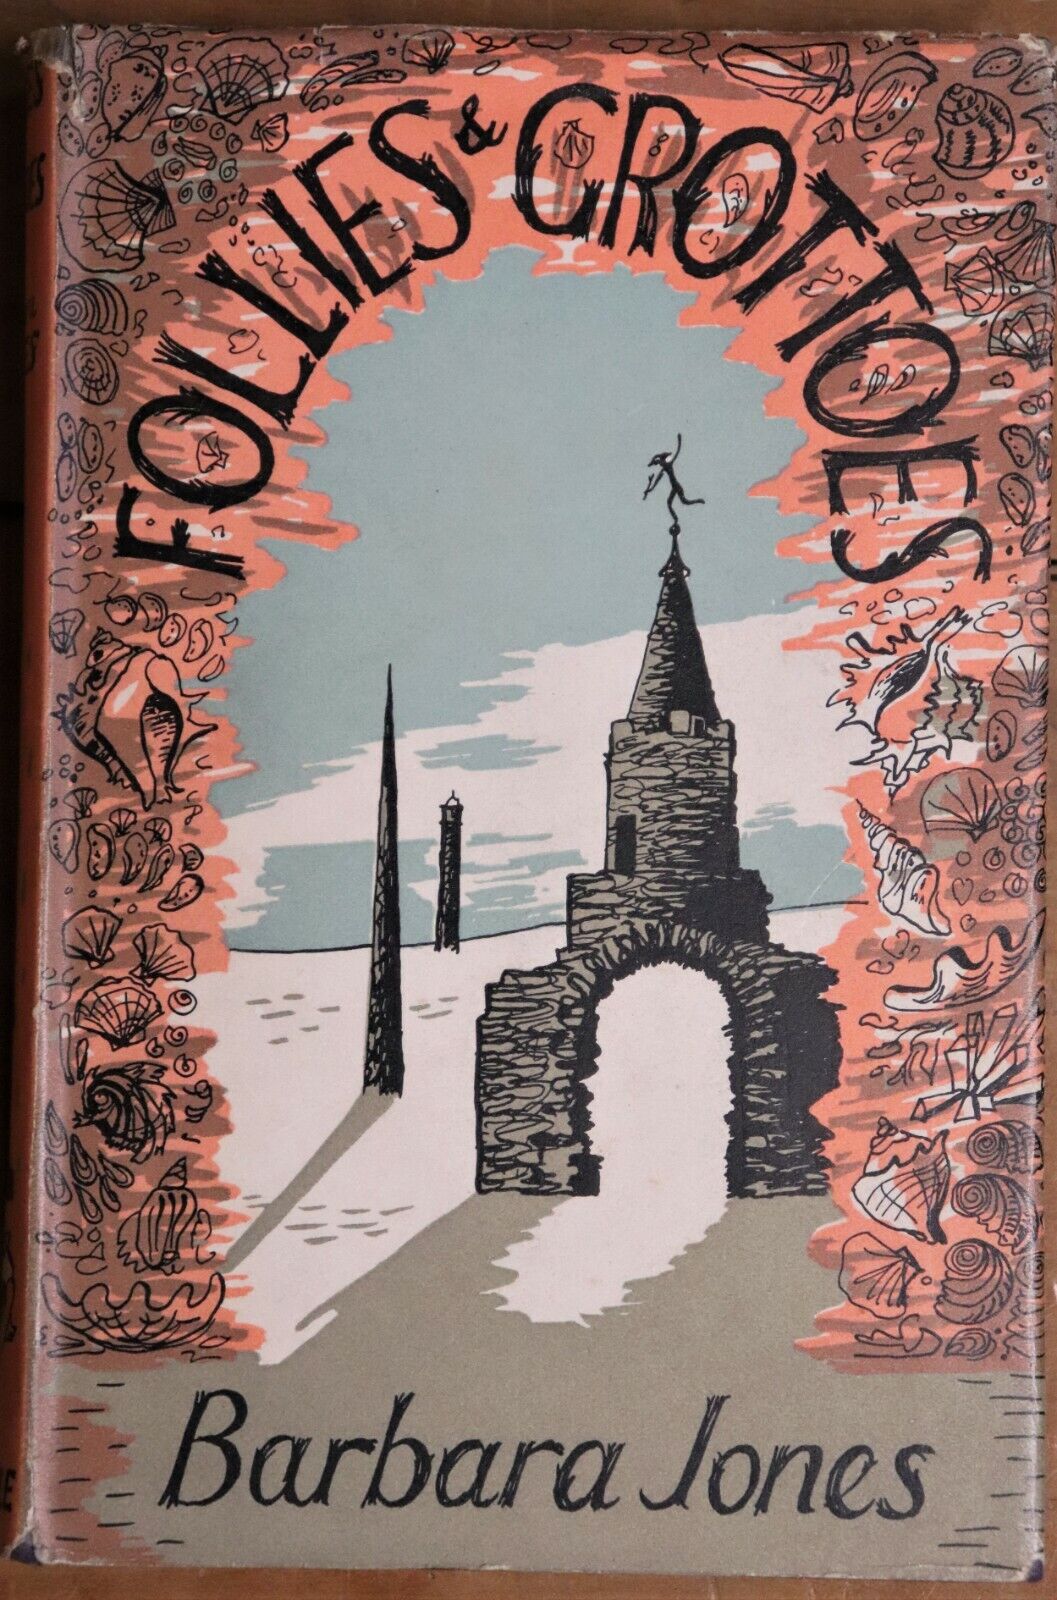 Follies & Grottoes - 1953 - Antique Book - 1st Edition - Barbara Jones